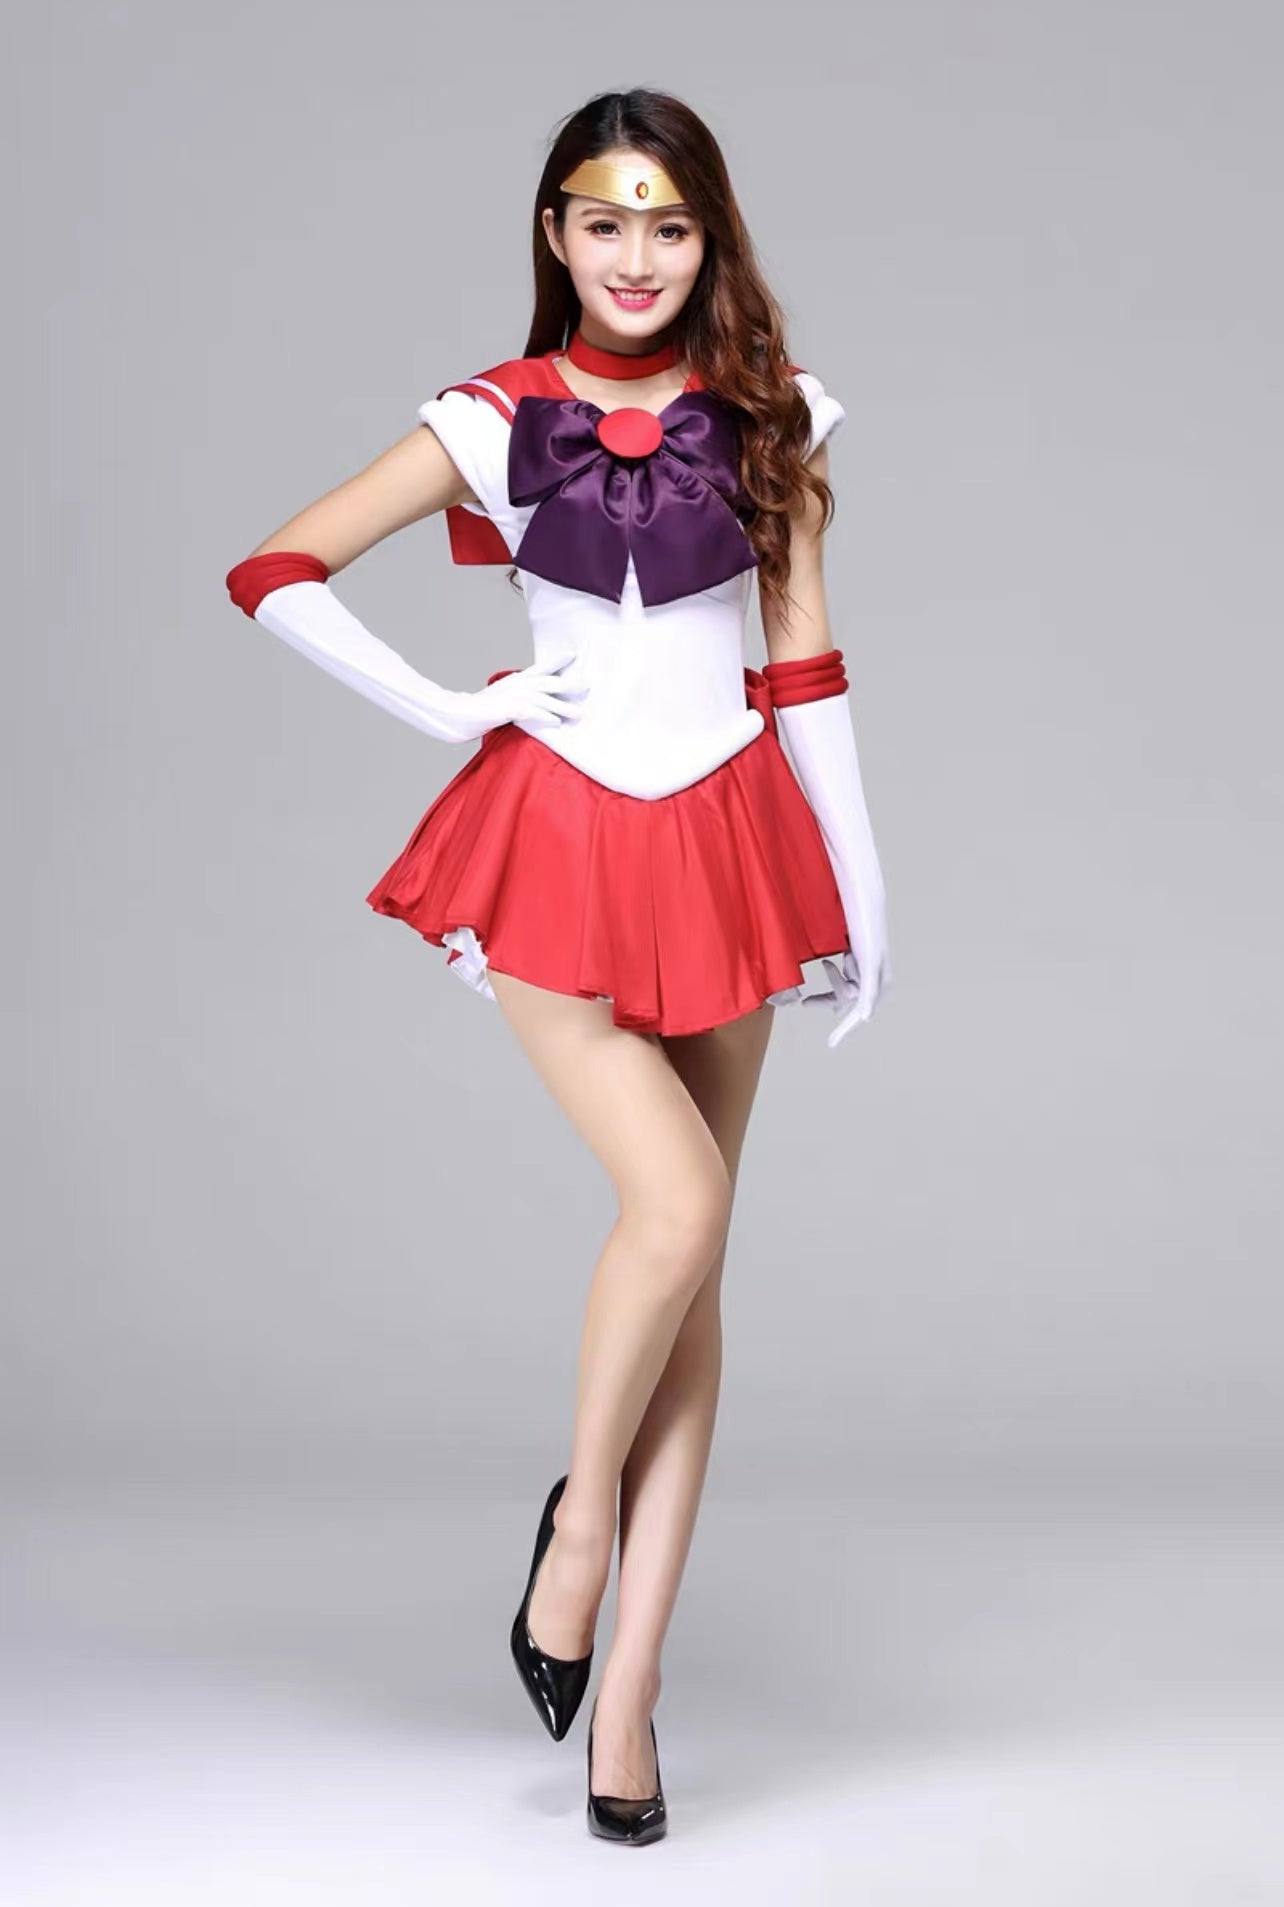 Sailor Mars Costume for Halloween Cosplay – PeachyBaby